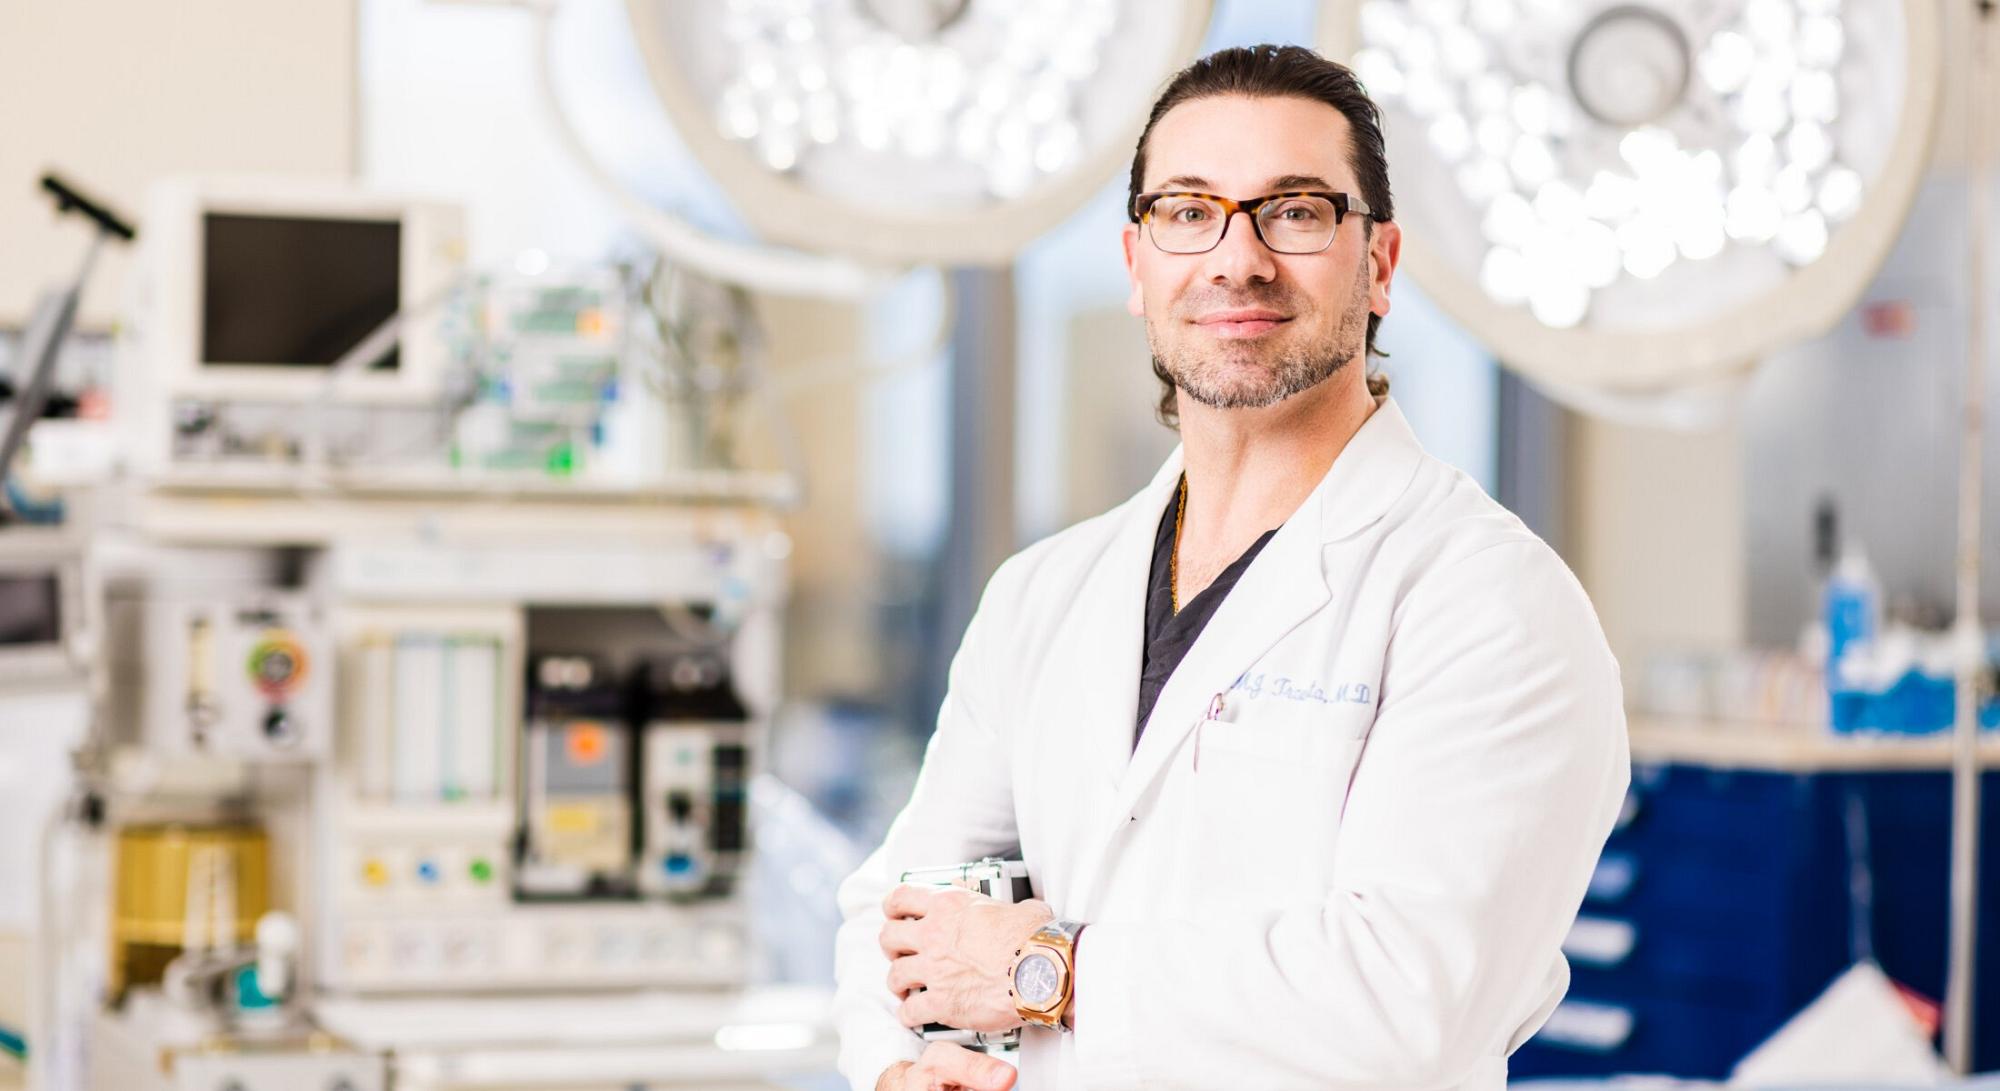 Dallas arm lift expert, Dr. Matthew J. Trovato at his Dallas Plastic Surgery Practice